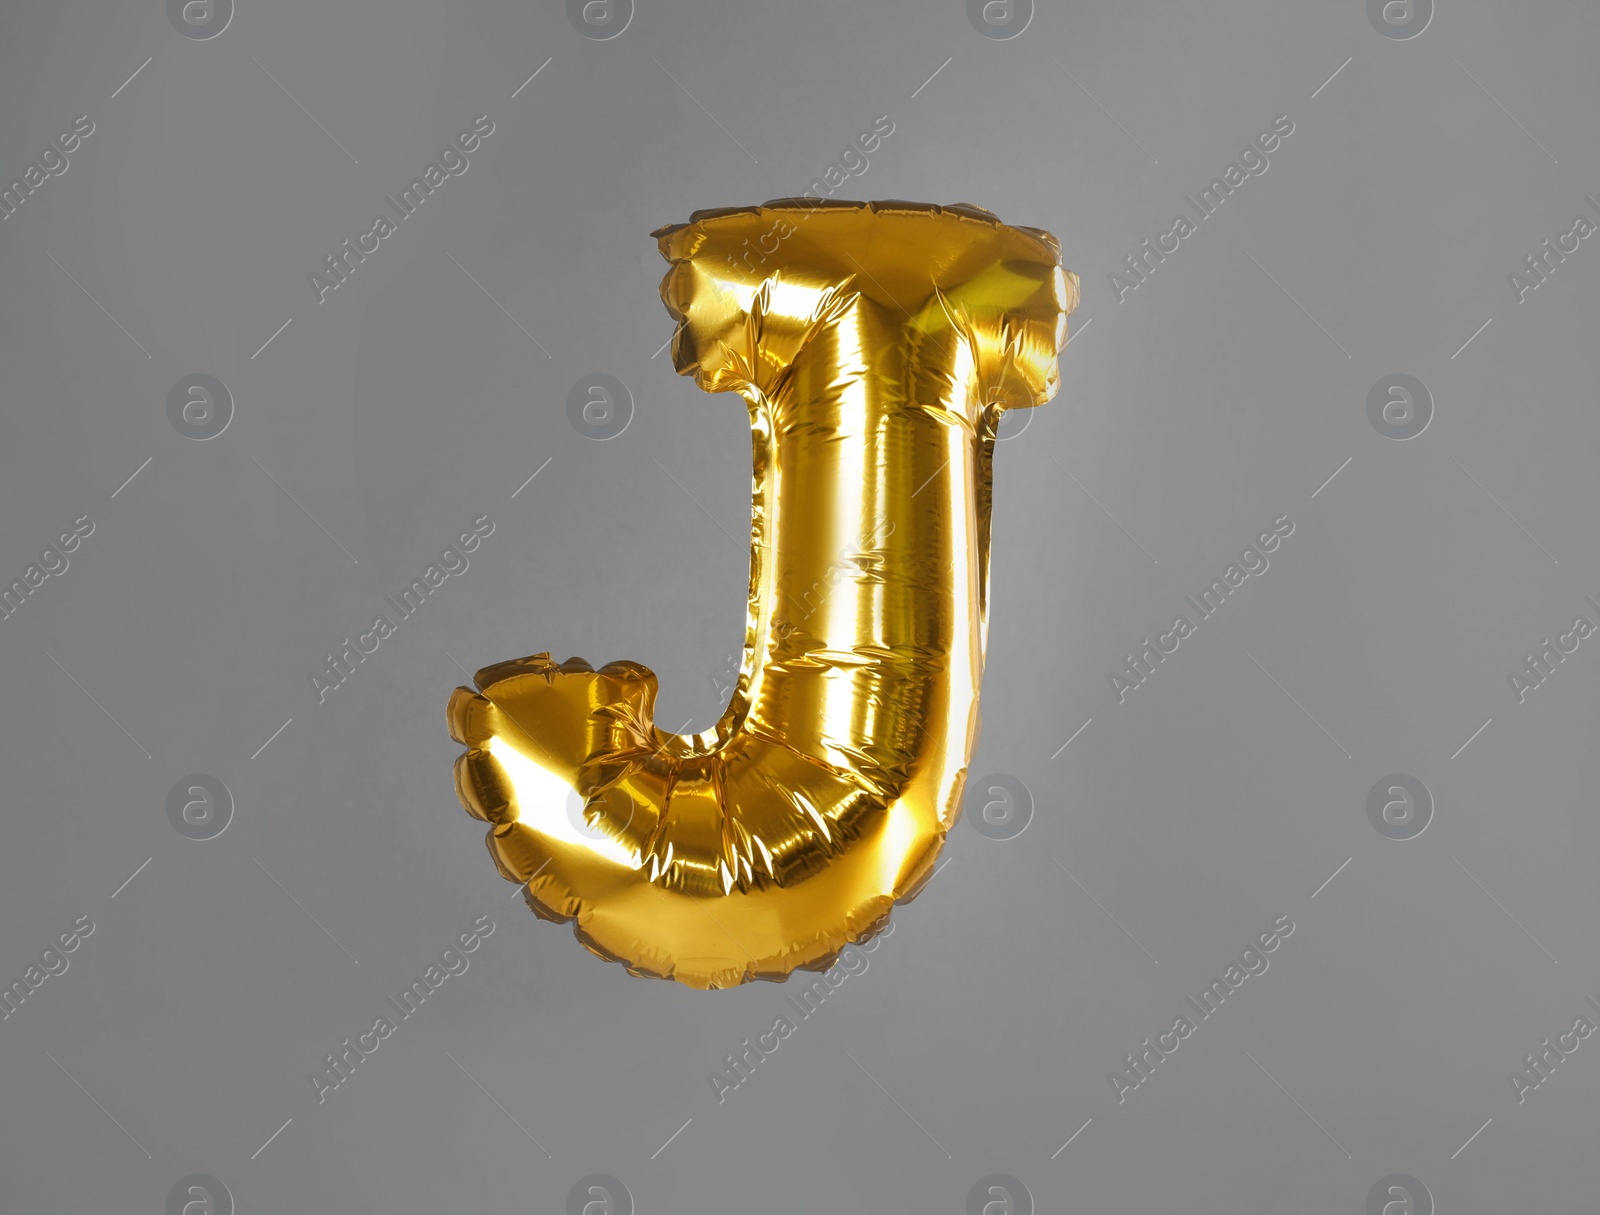 Photo of Golden letter J balloon on grey background